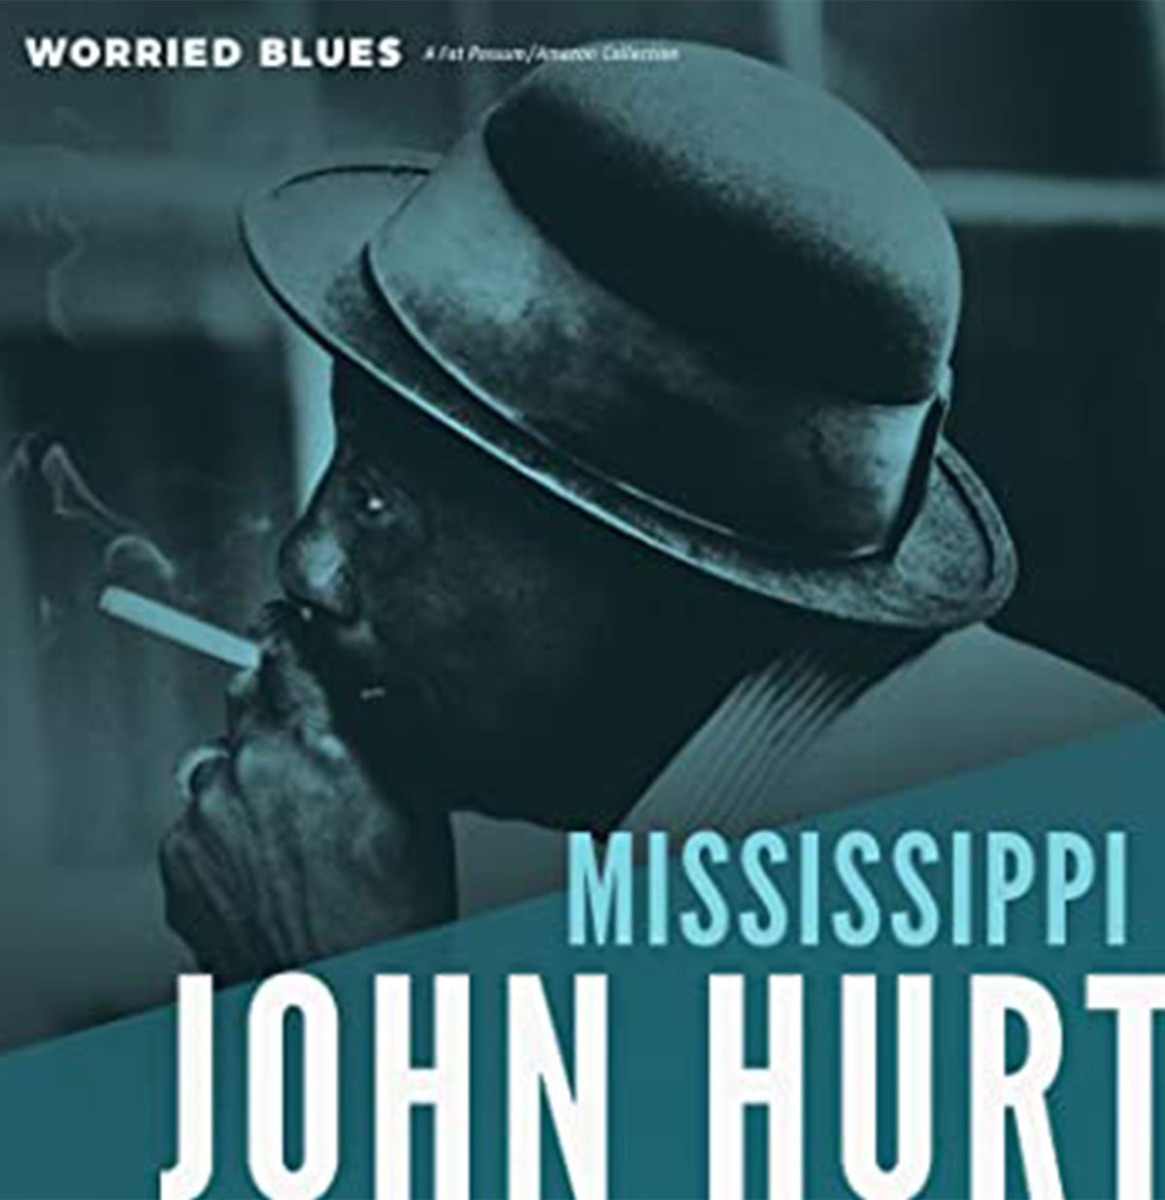 Mississippi John Hurt - Worried Blues LP